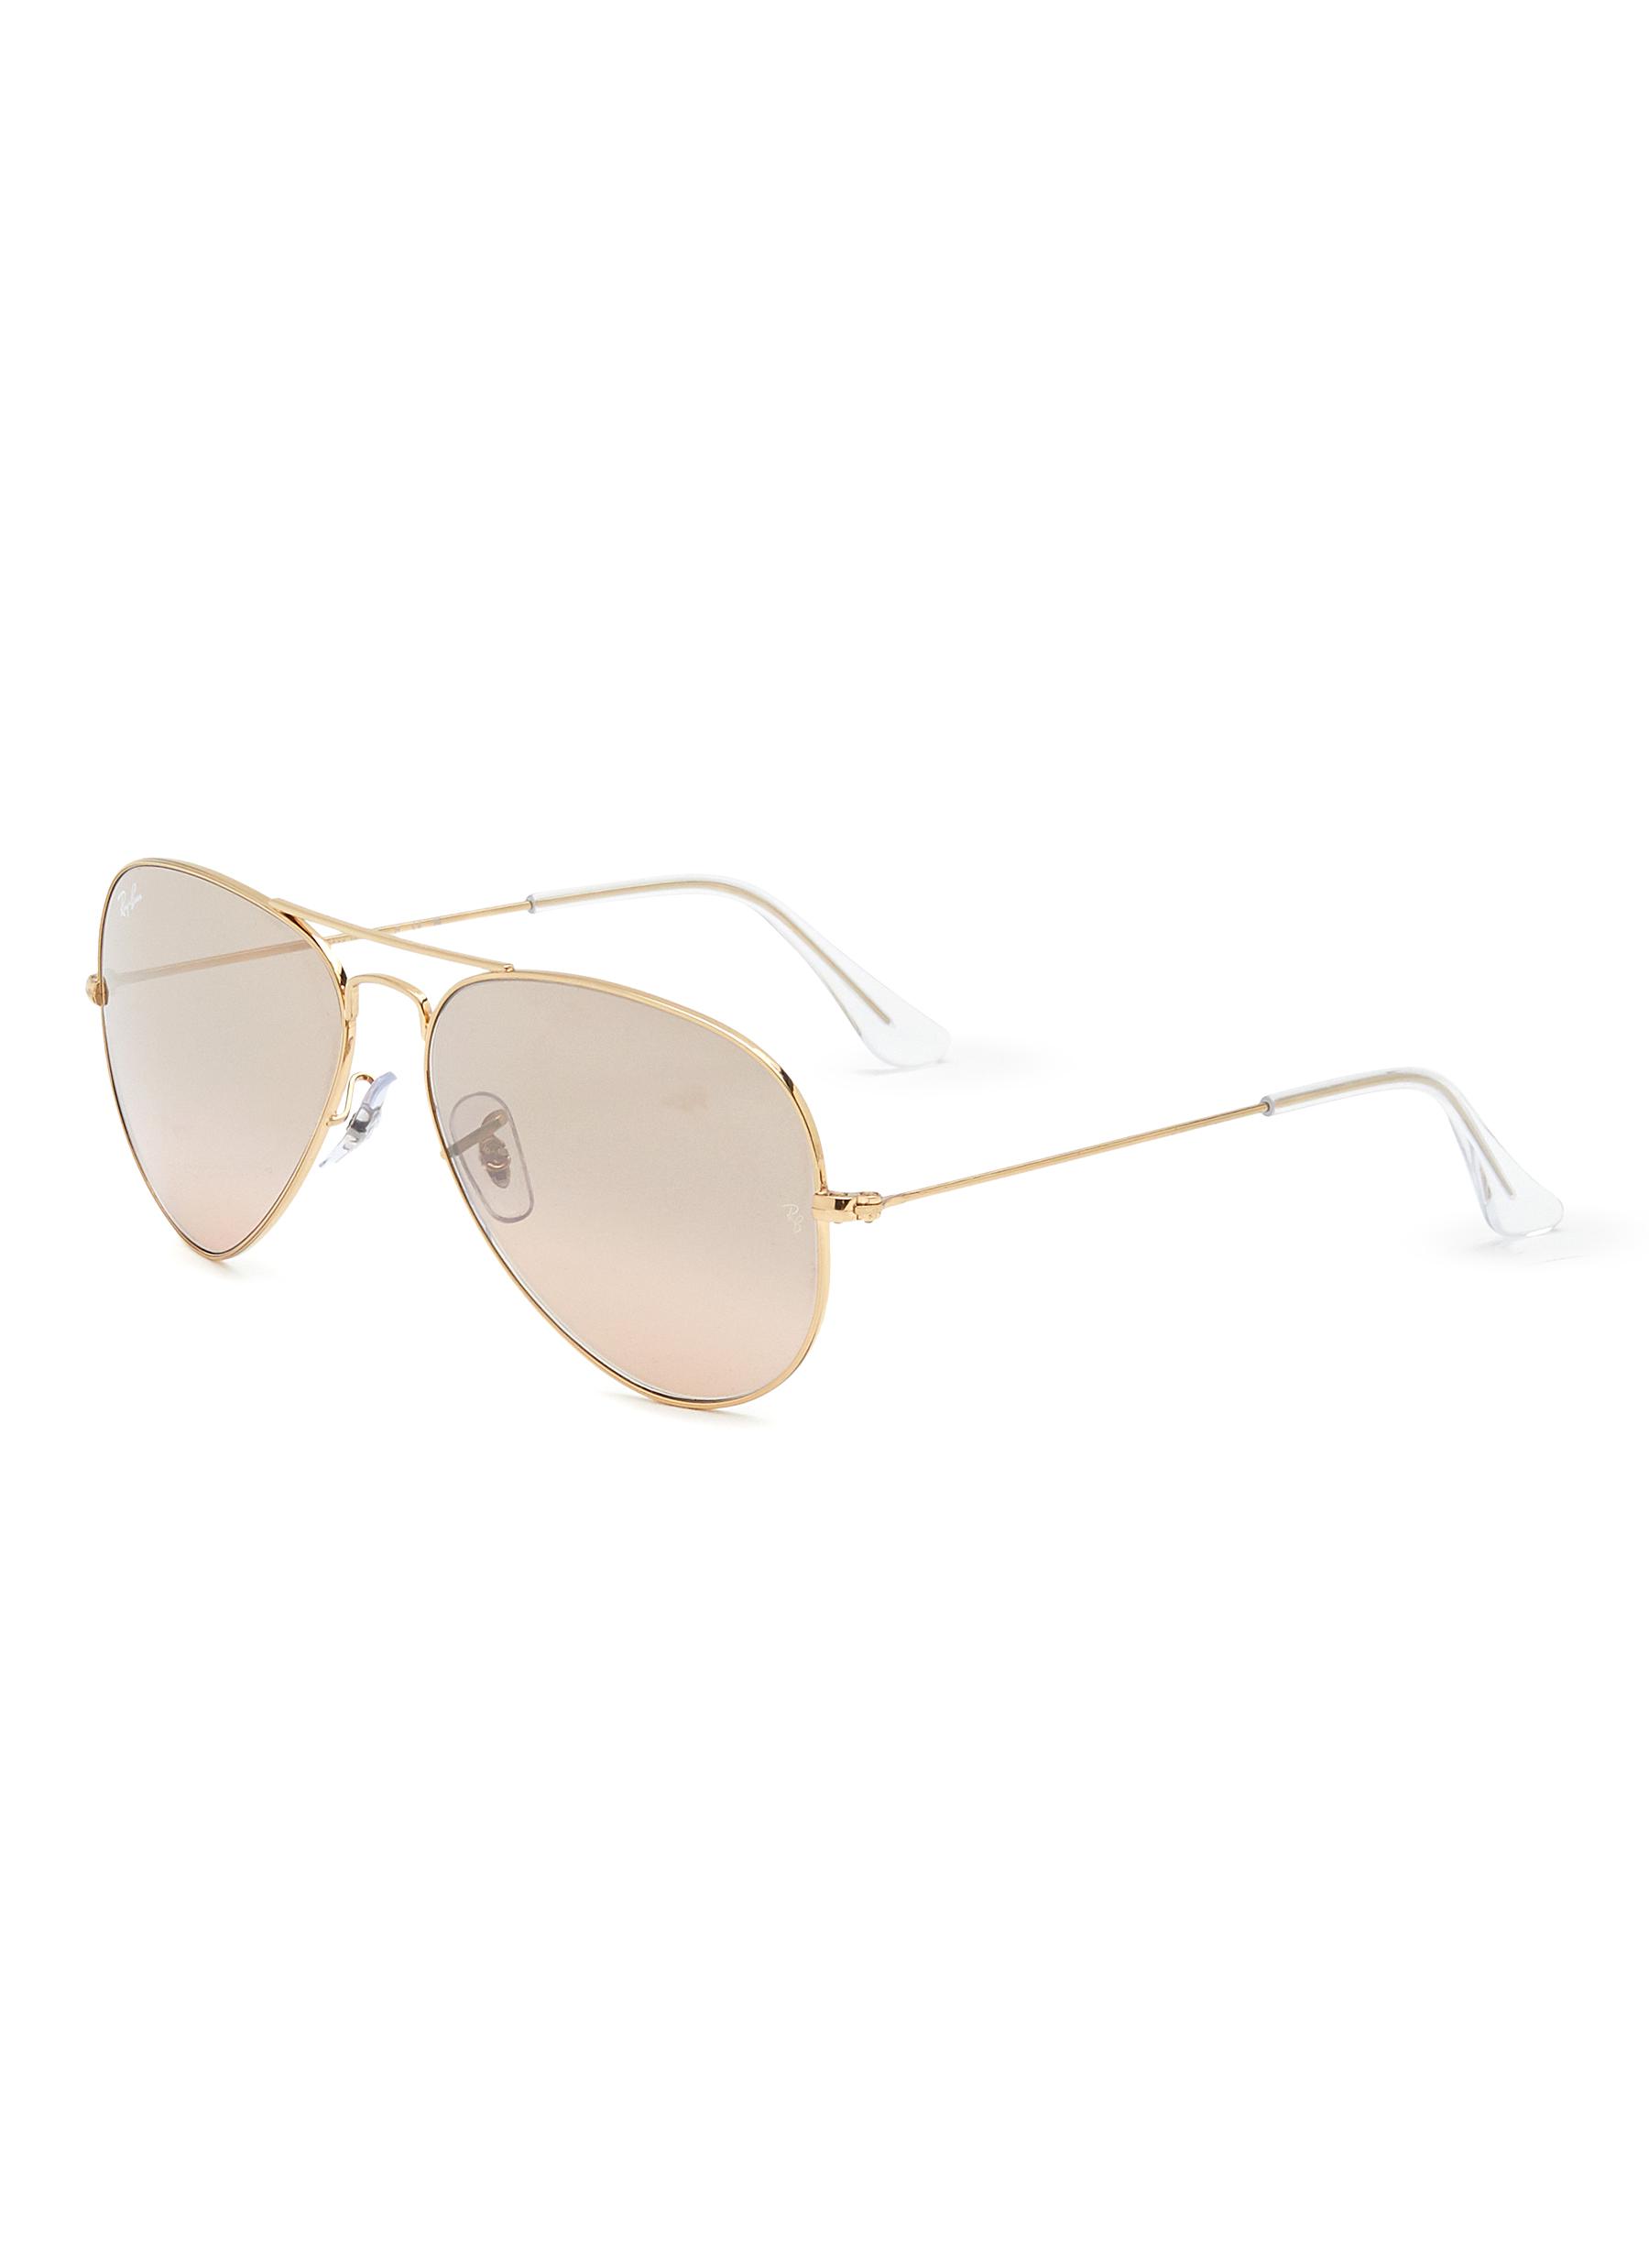 Gradient Pink Lens Gold Toned Metal Aviator Sunglasses